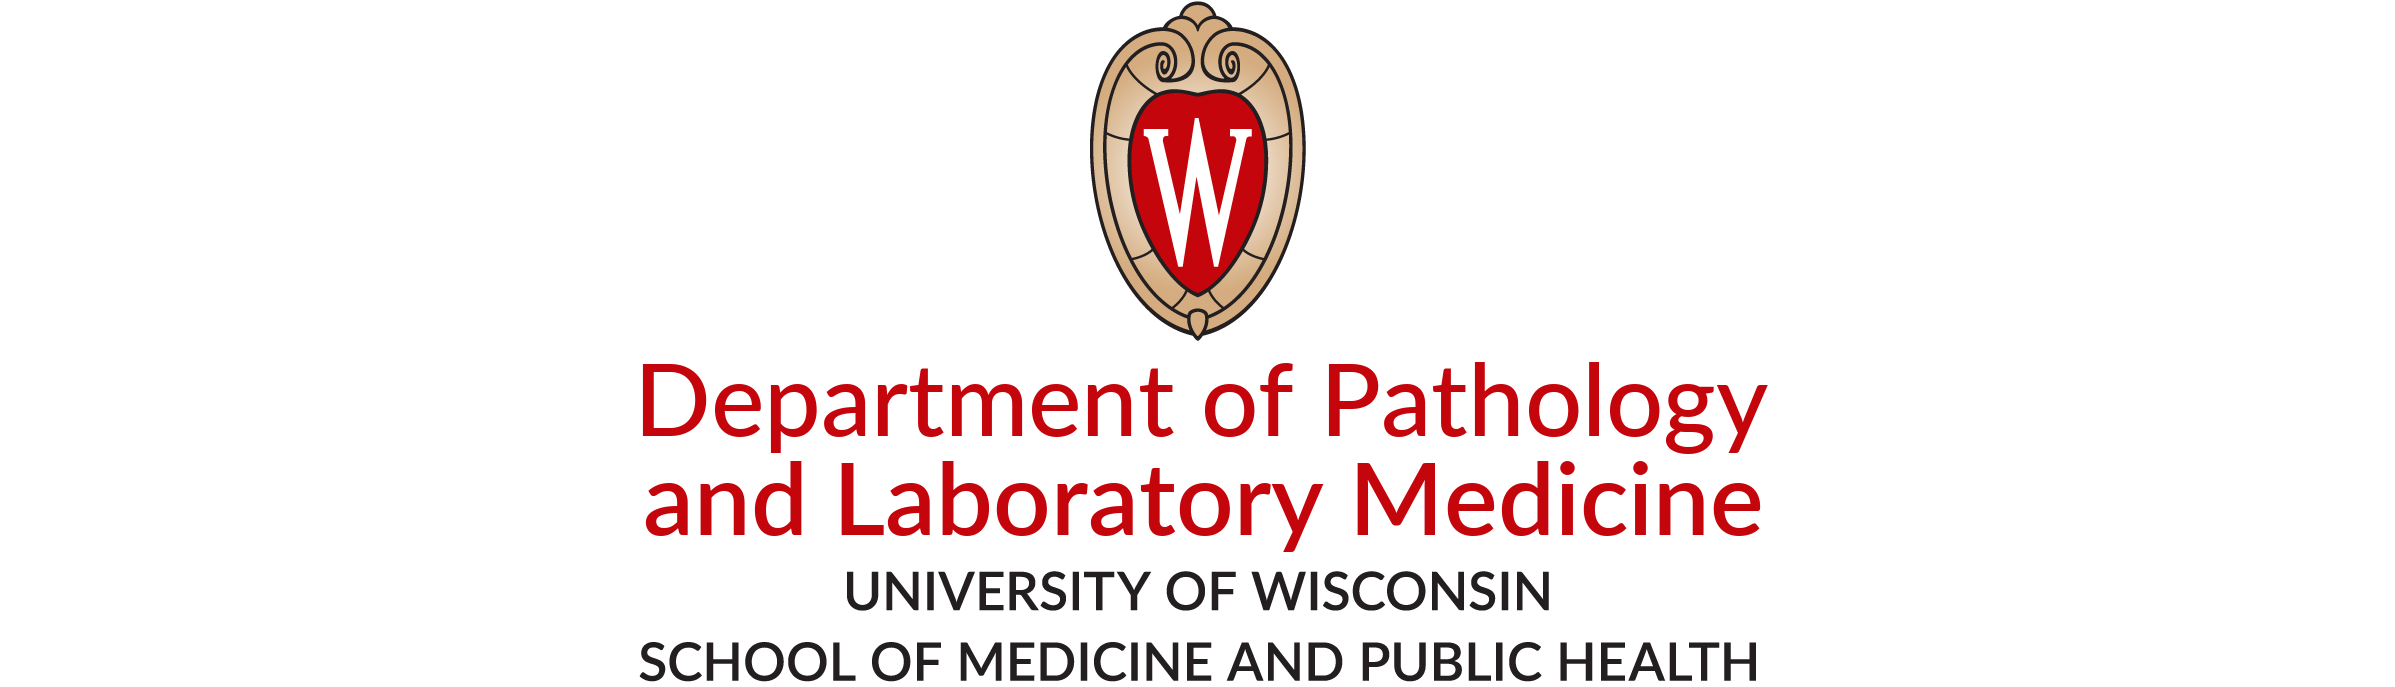 Dept of Pathology and Laboratory Medicine webpage